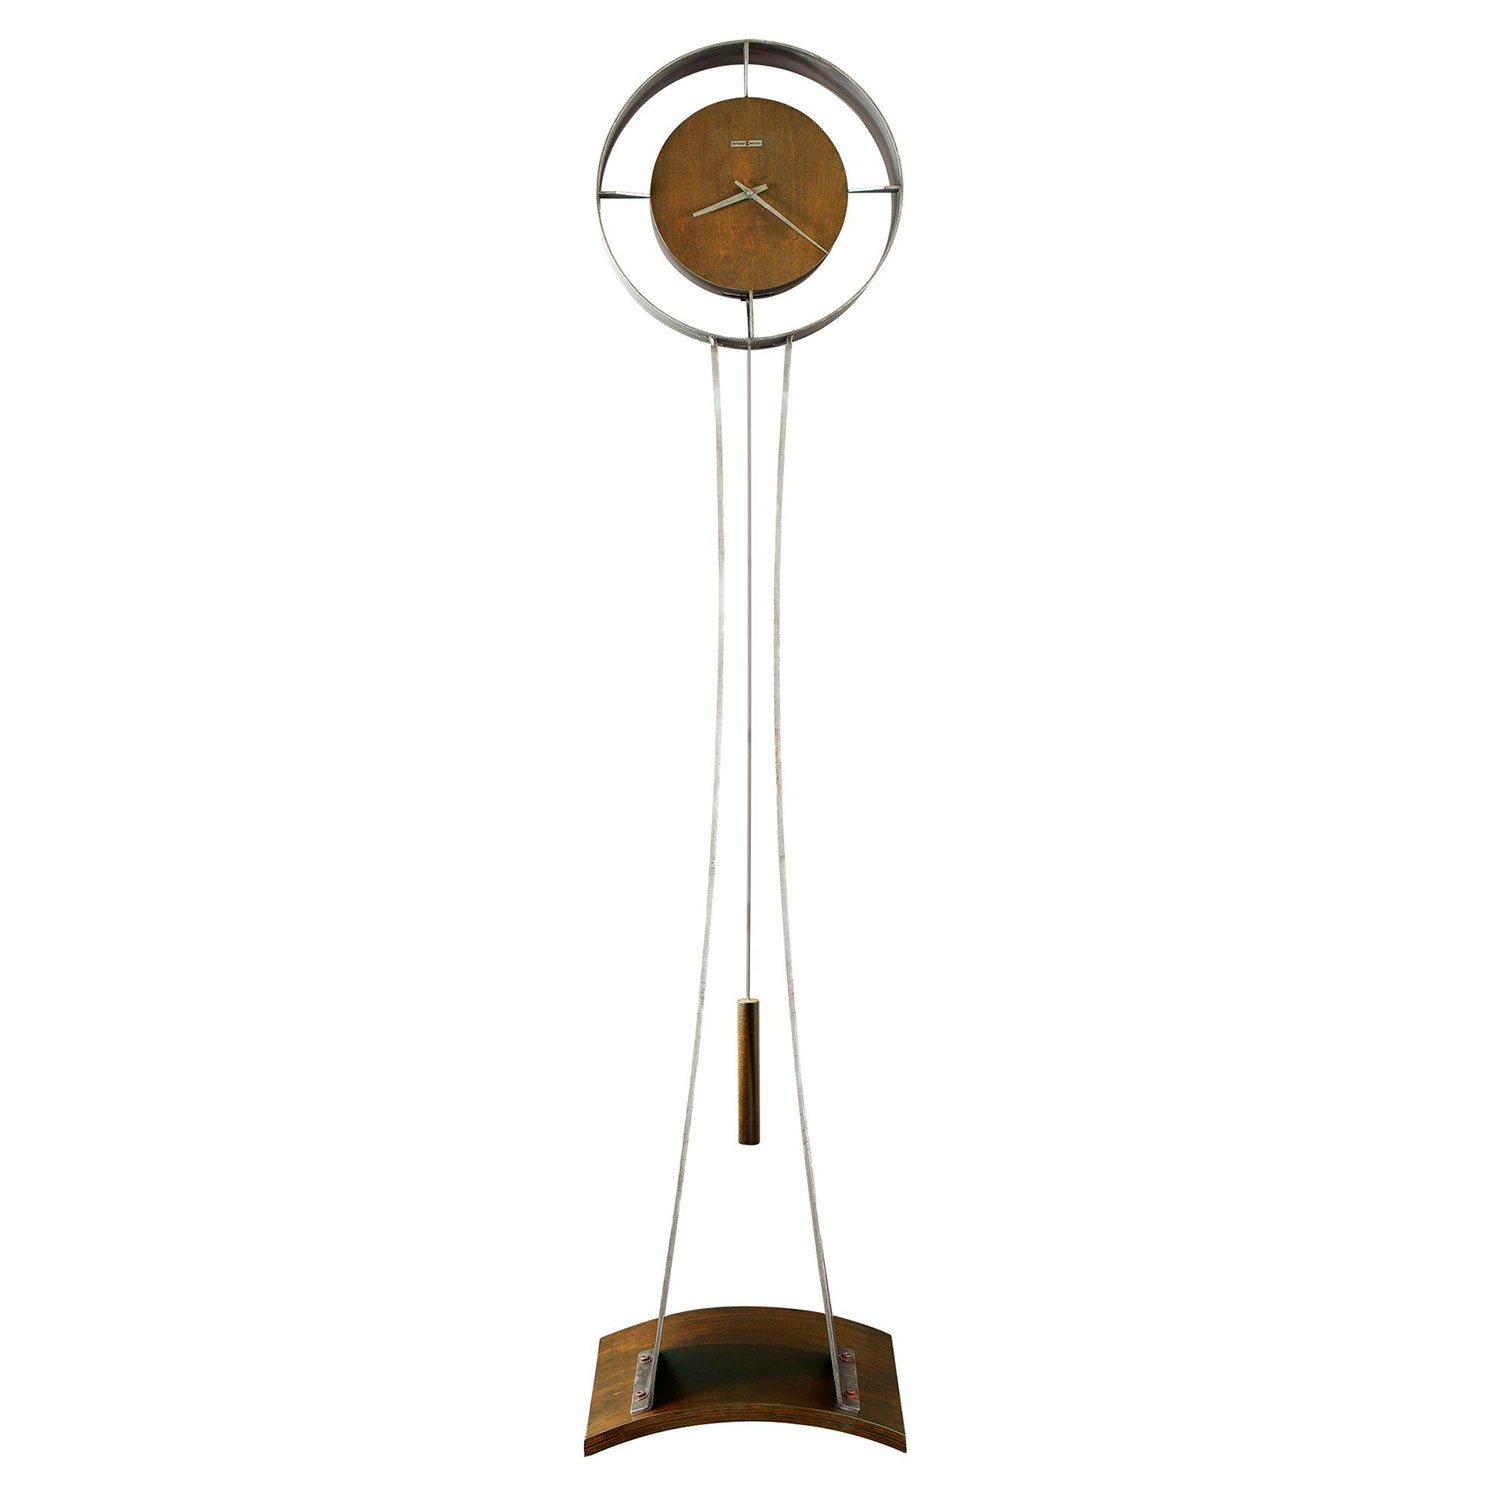 Напольные часы Howard miller 615-108 мельница для перца smart solutions грецкий орех 1 шт